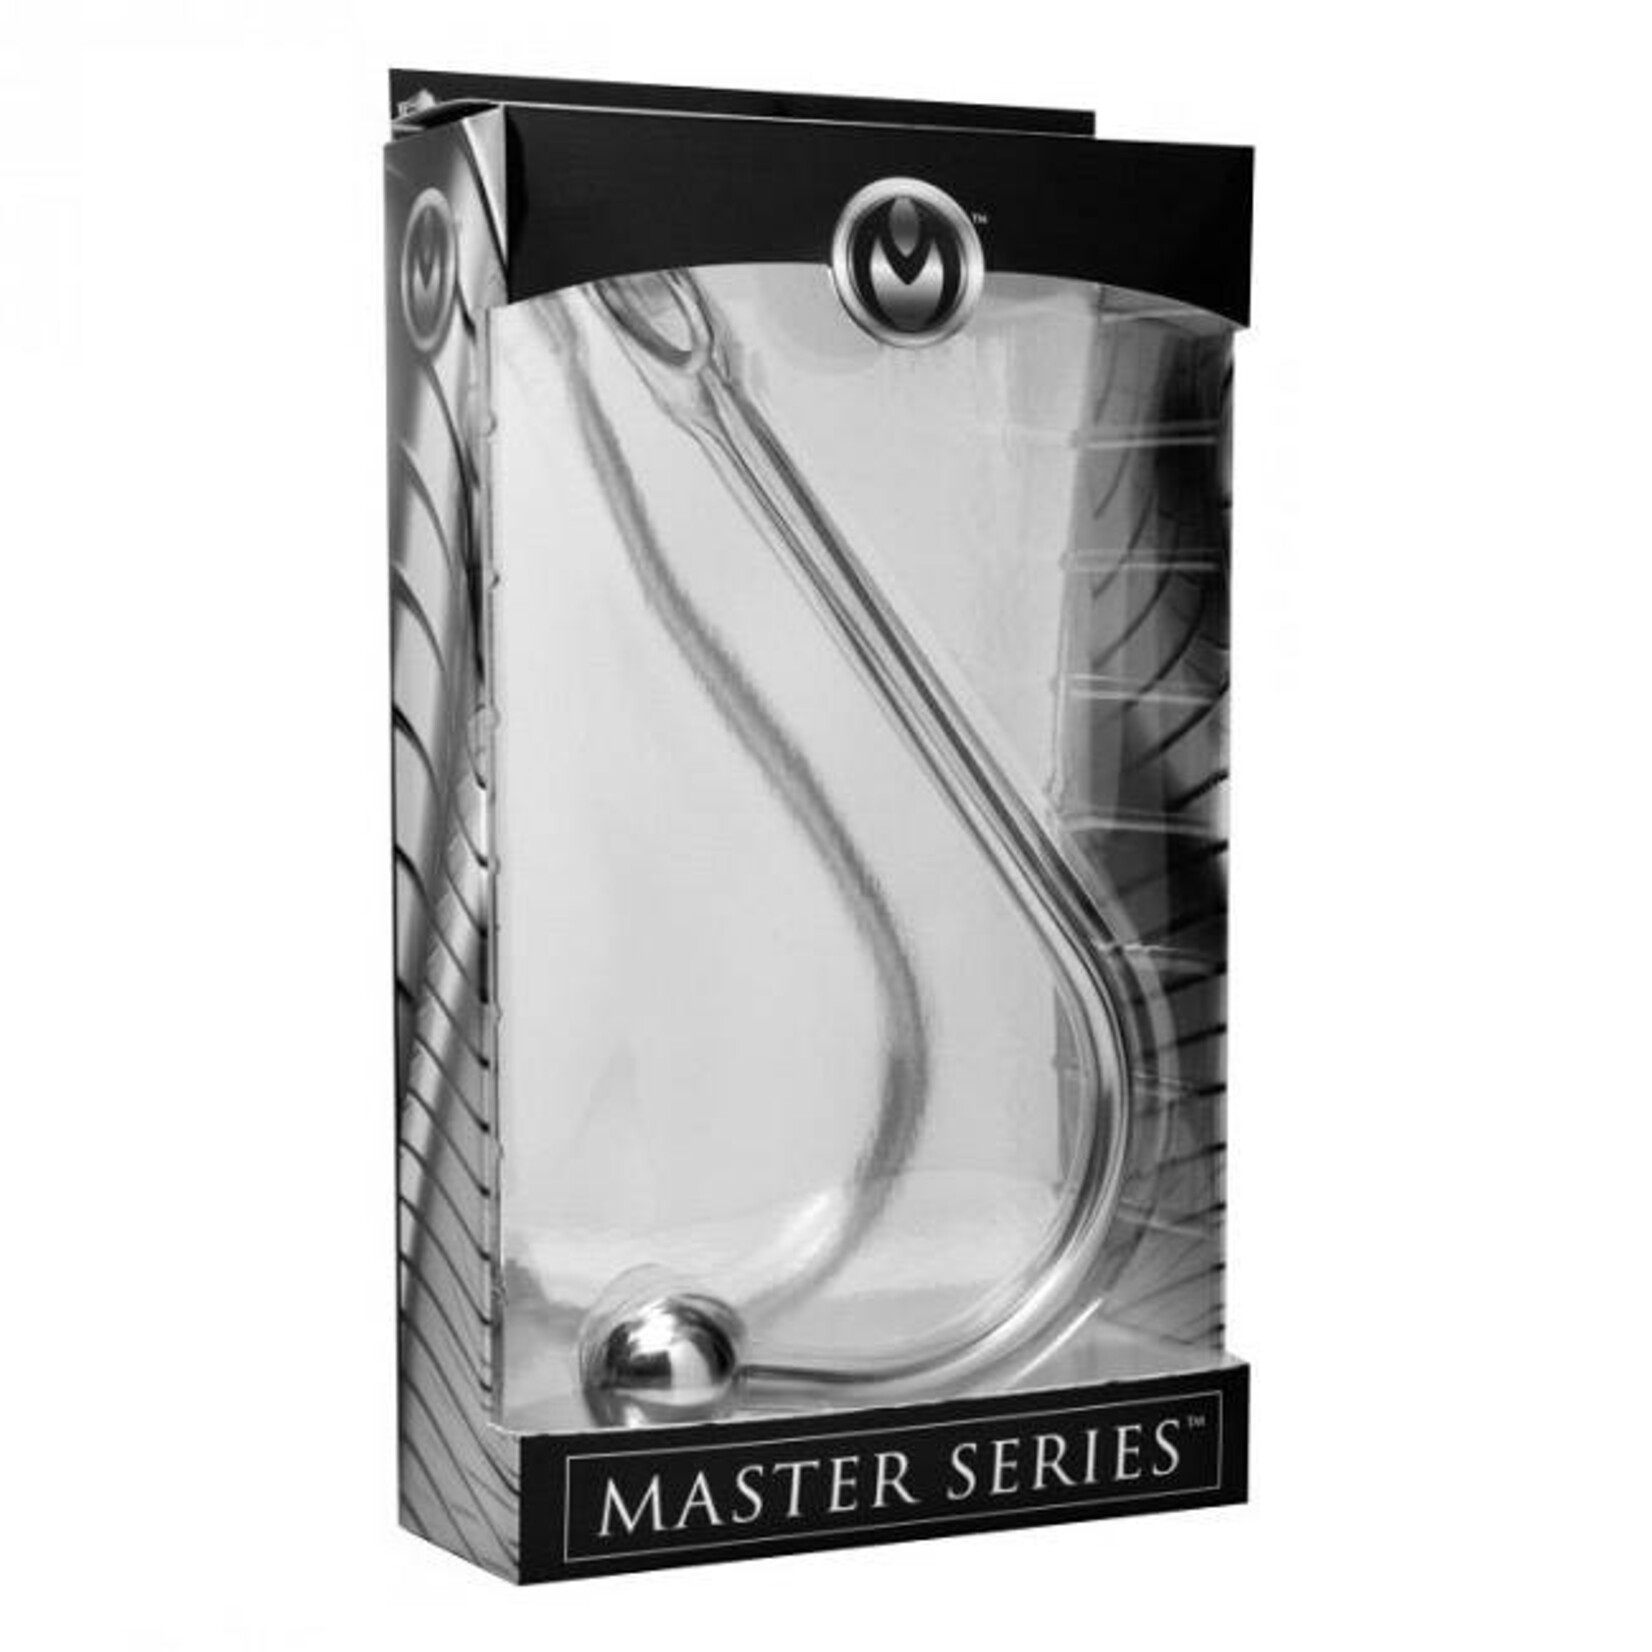 Master Series Master Series Hooked Stainless Steel Anal Hook